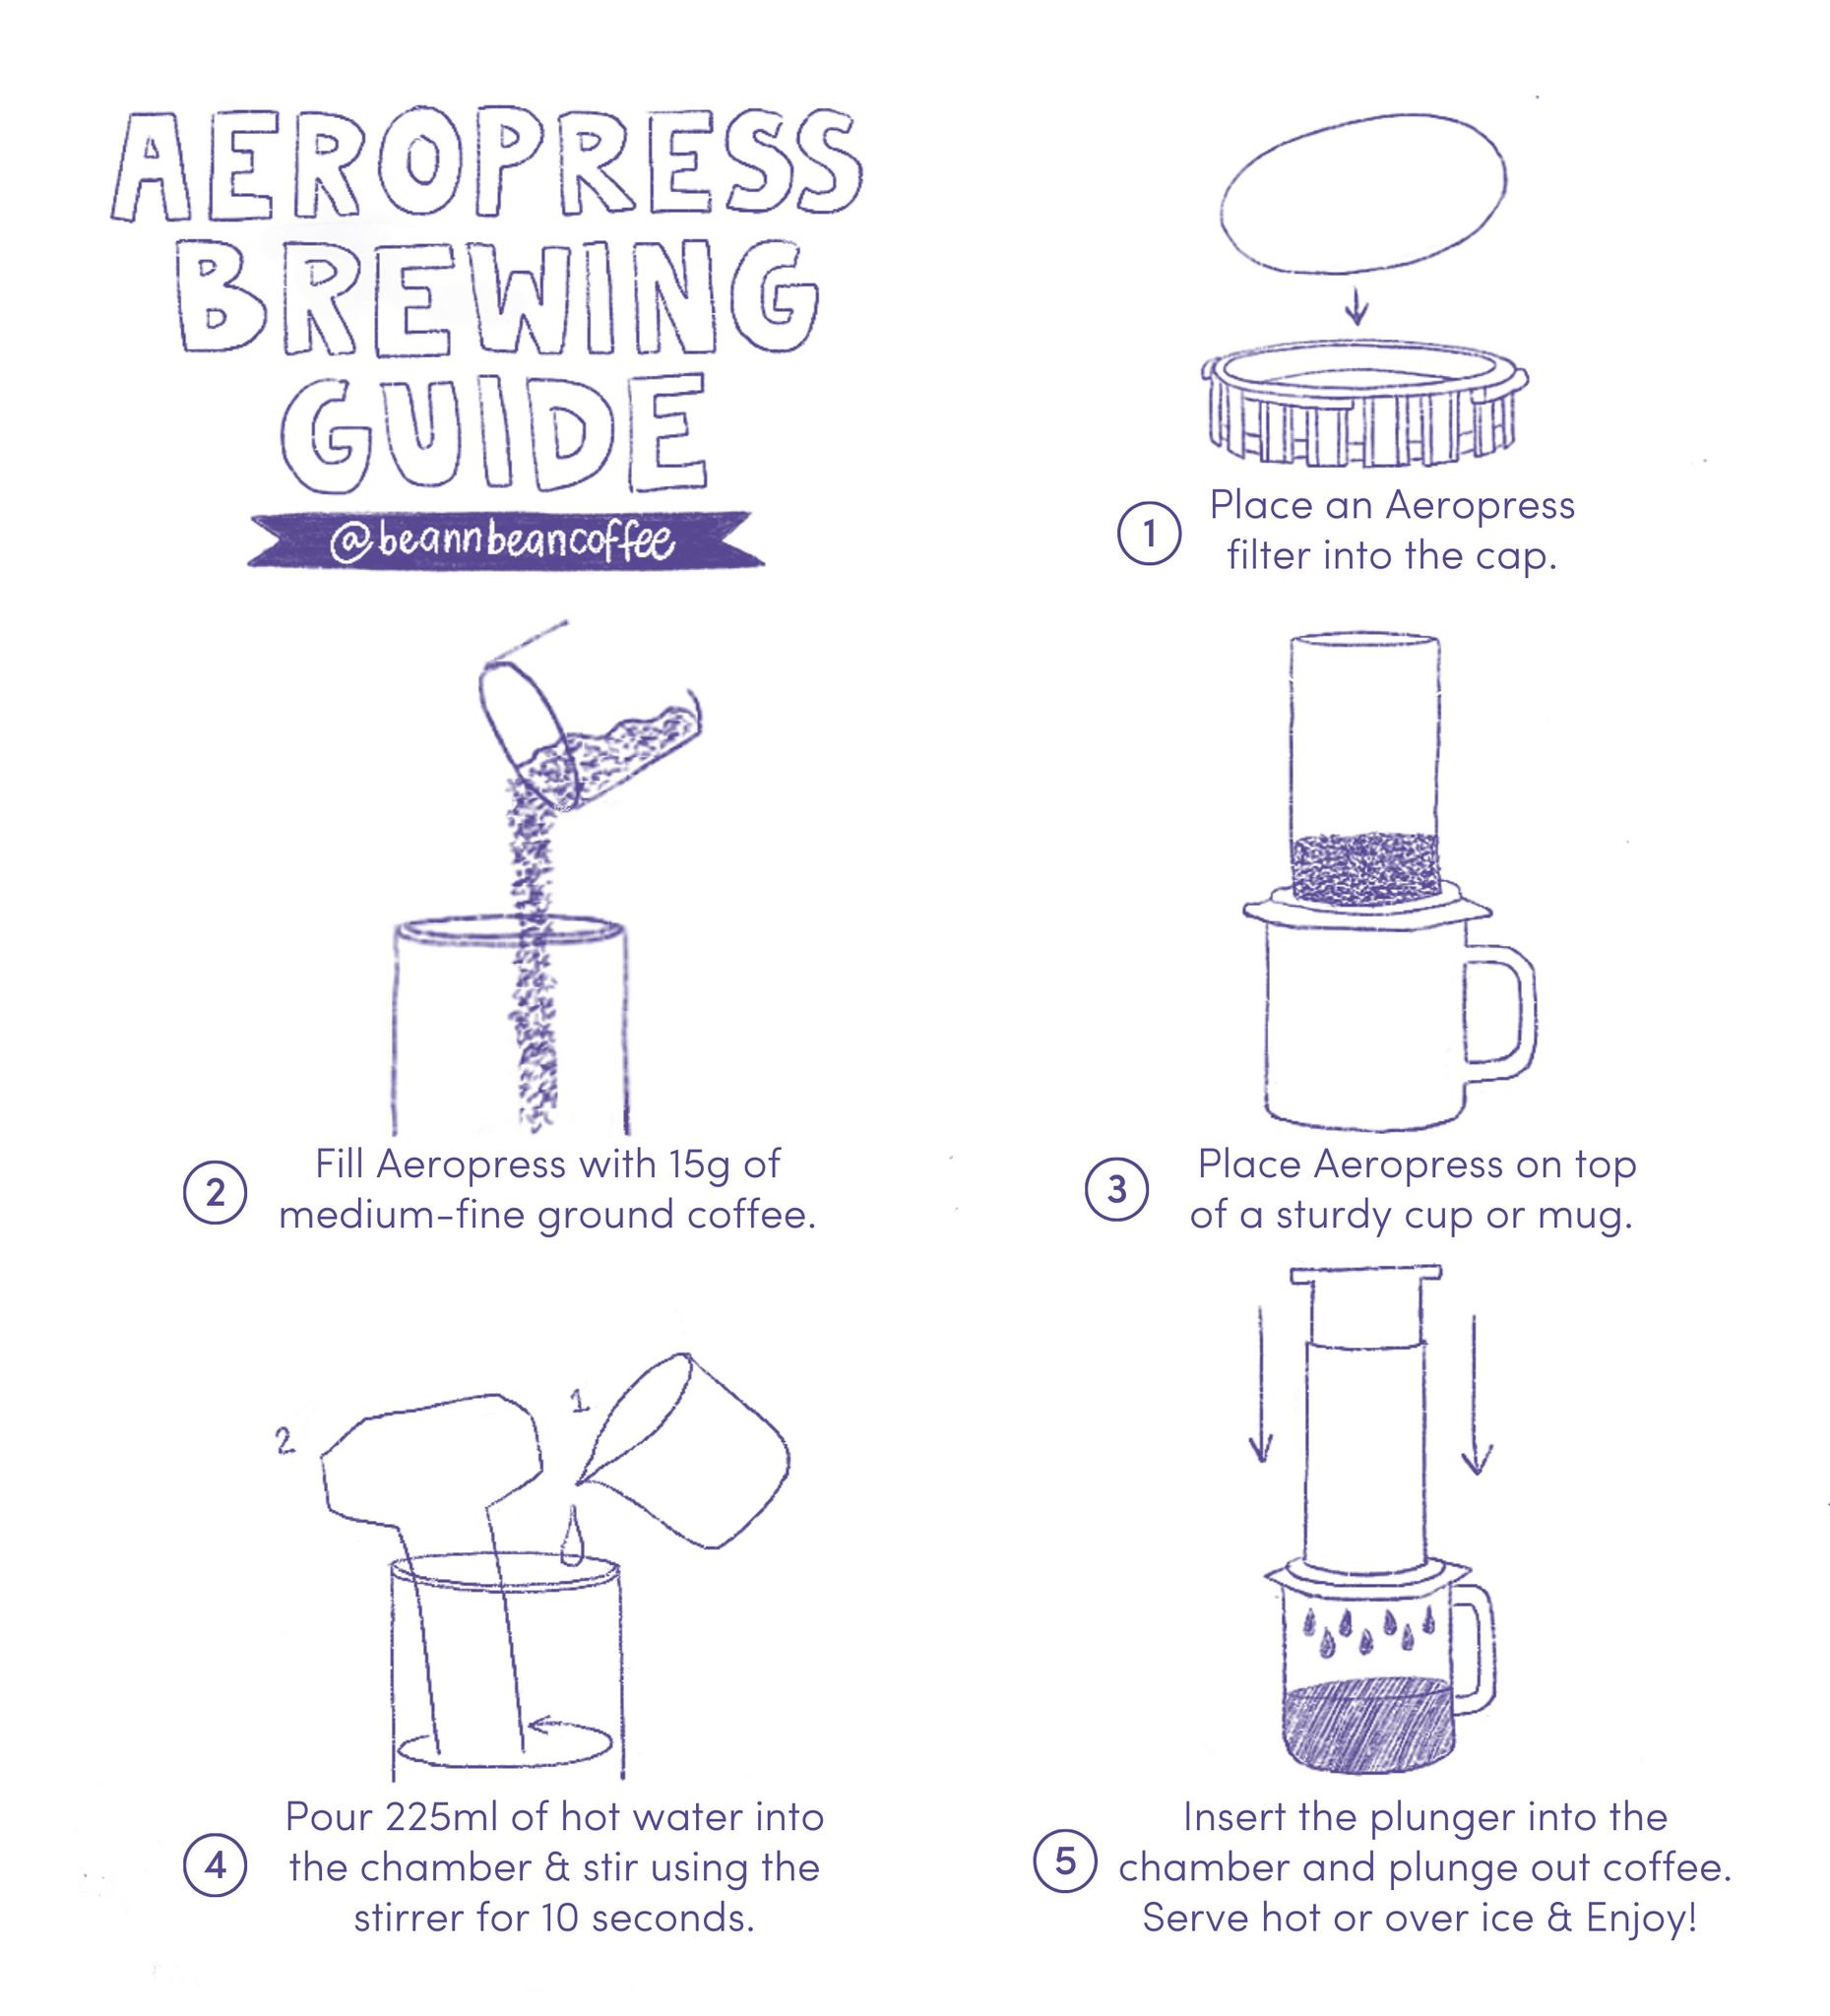 Bean & Bean NYC Aeropress Brewing Guide Instruction Sheet 